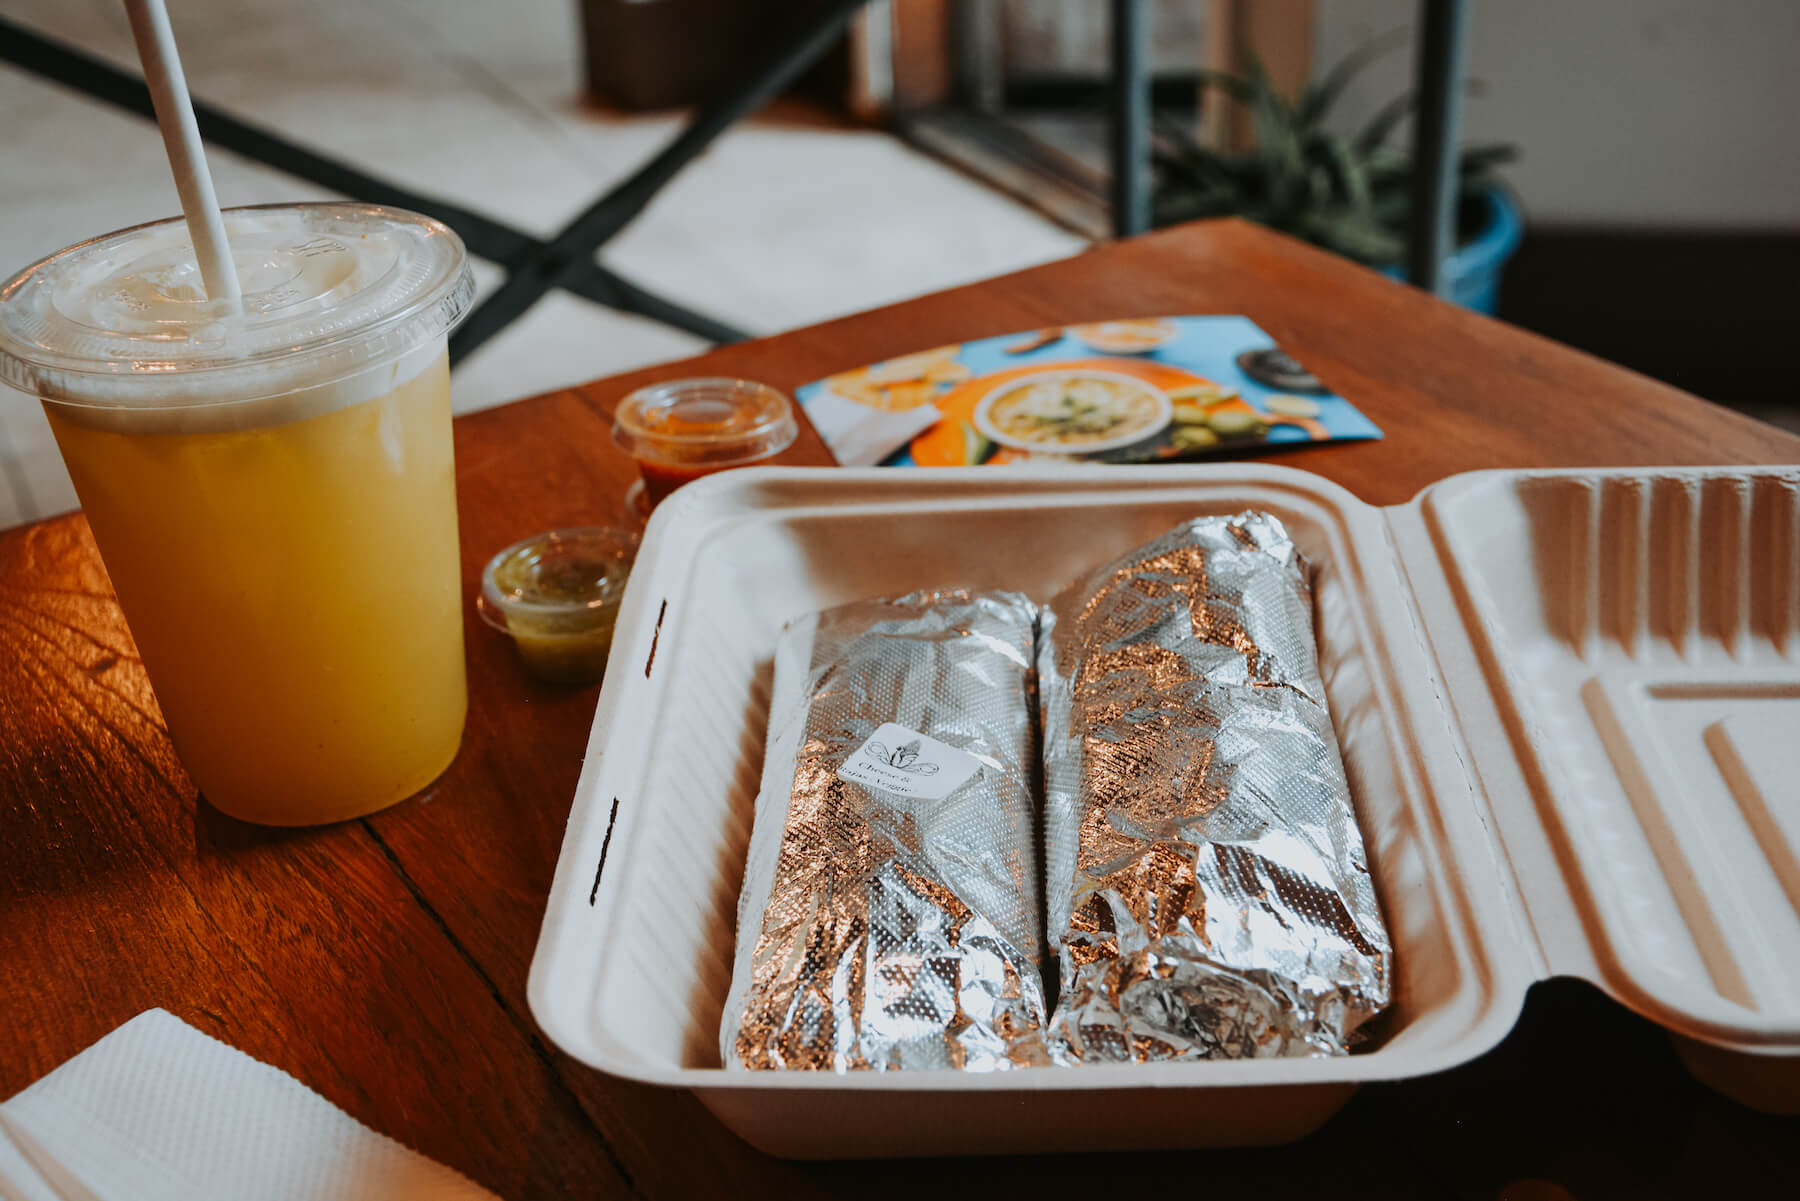 To-go tamales and agua de piña from La Guerrera's Kitchen in Oakland, CA. August 2021